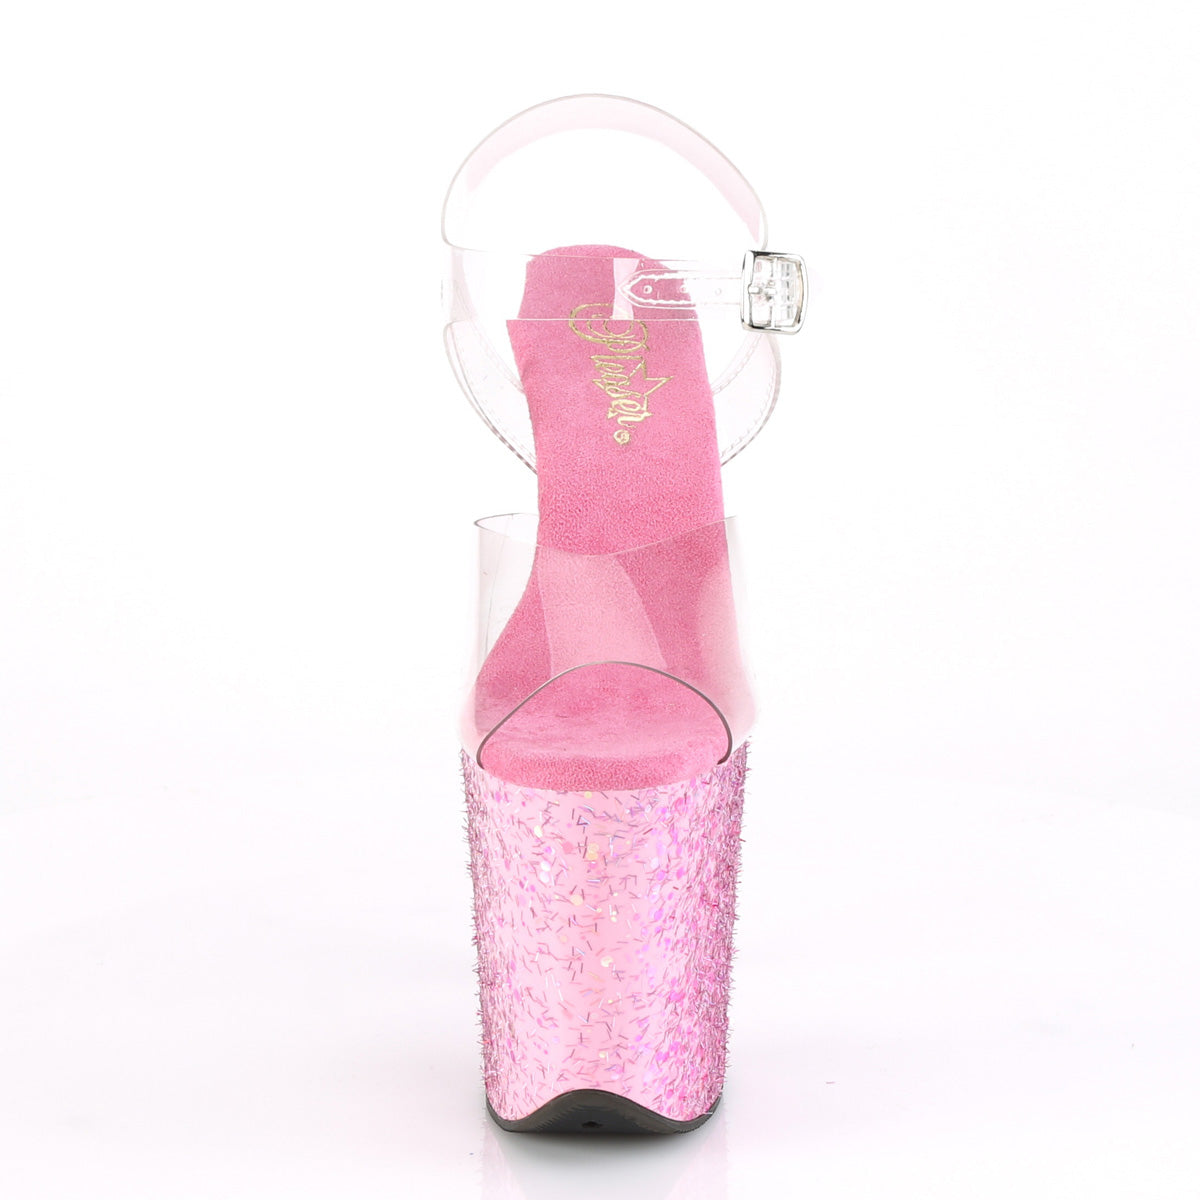 FLAMINGO-808CF Pink & Clear Ankle Peep Toe High Heel